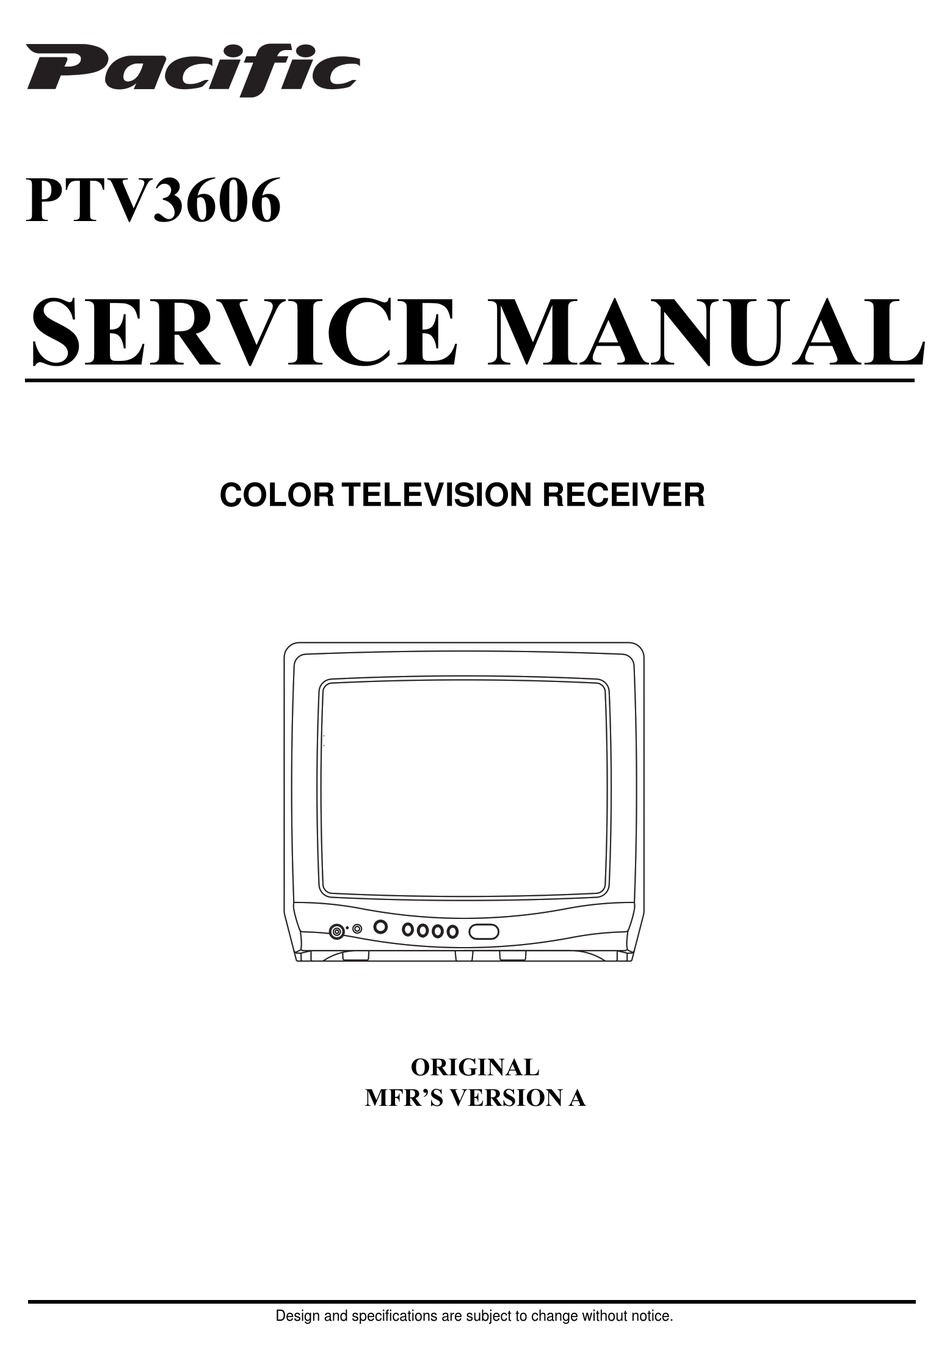 PACIFIC PTV3606 SERVICE MANUAL Pdf Download | ManualsLib